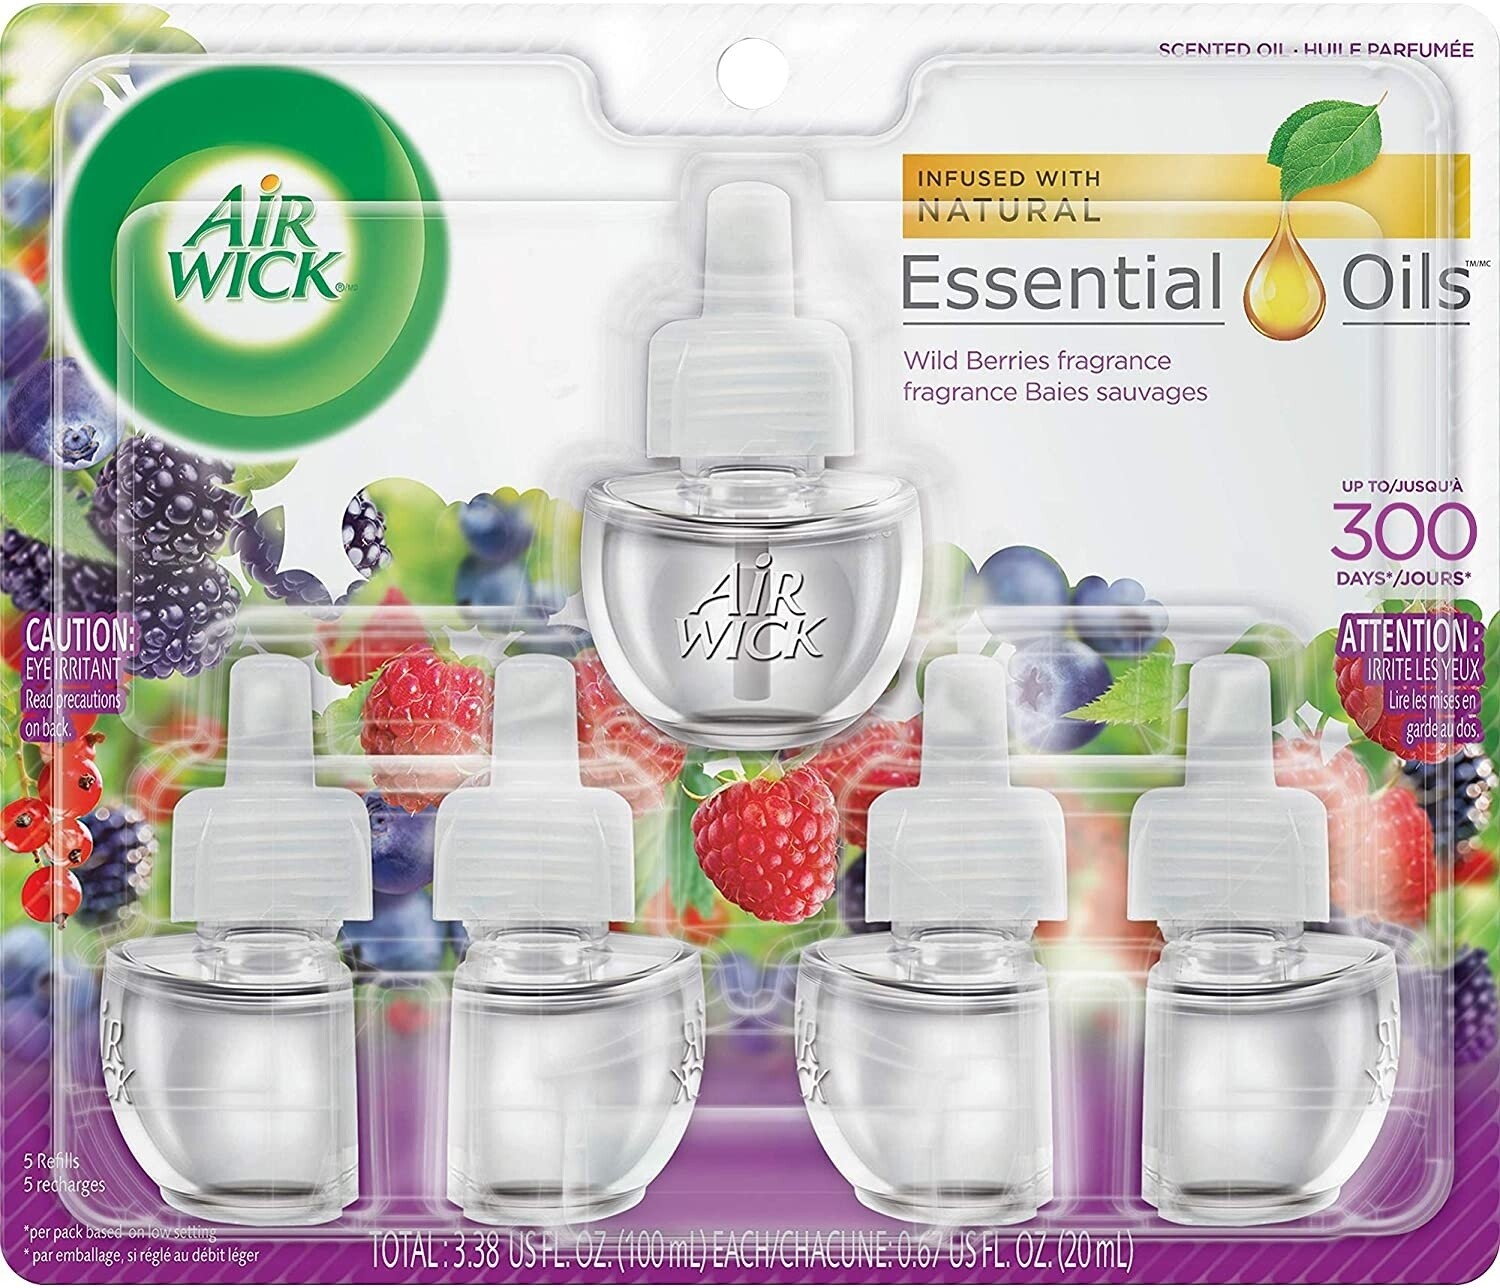 Air wick refill per bottle- wild berry